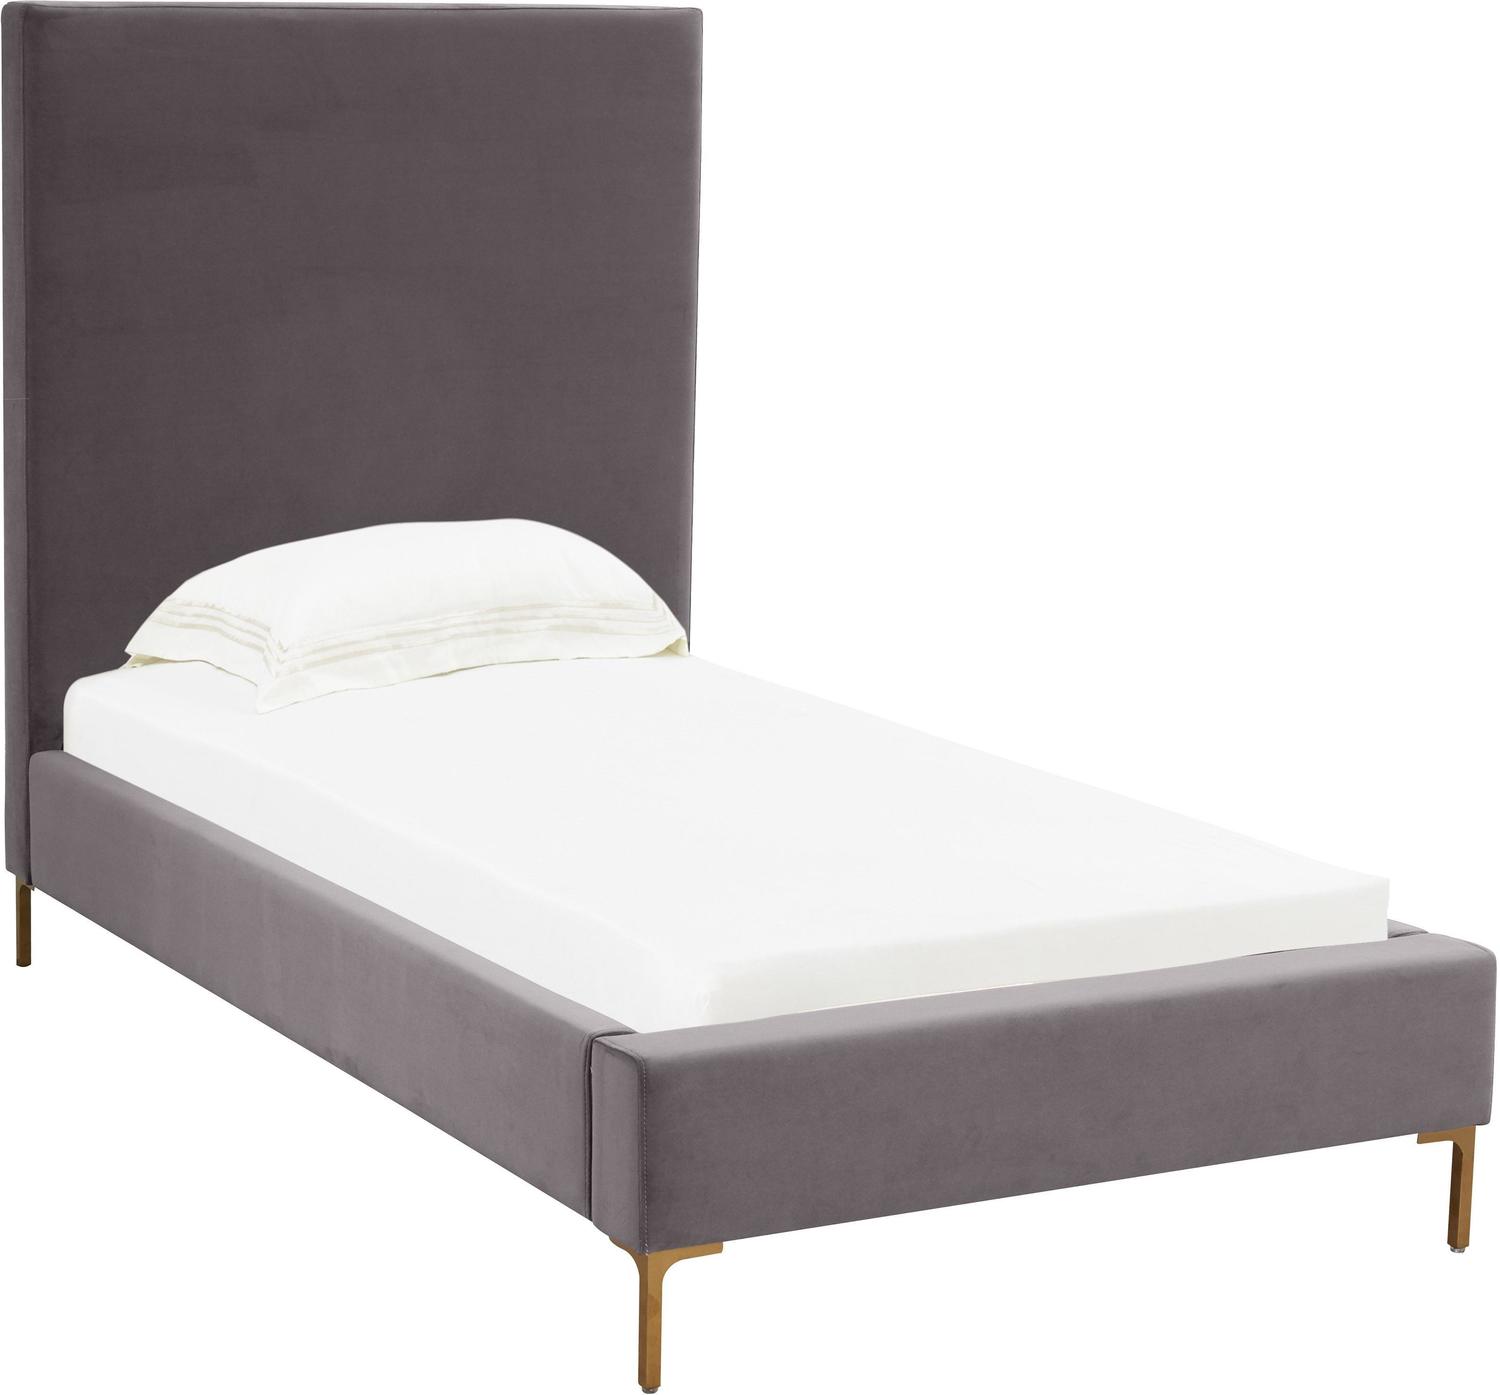 king size low profile platform bed Contemporary Design Furniture Beds Grey